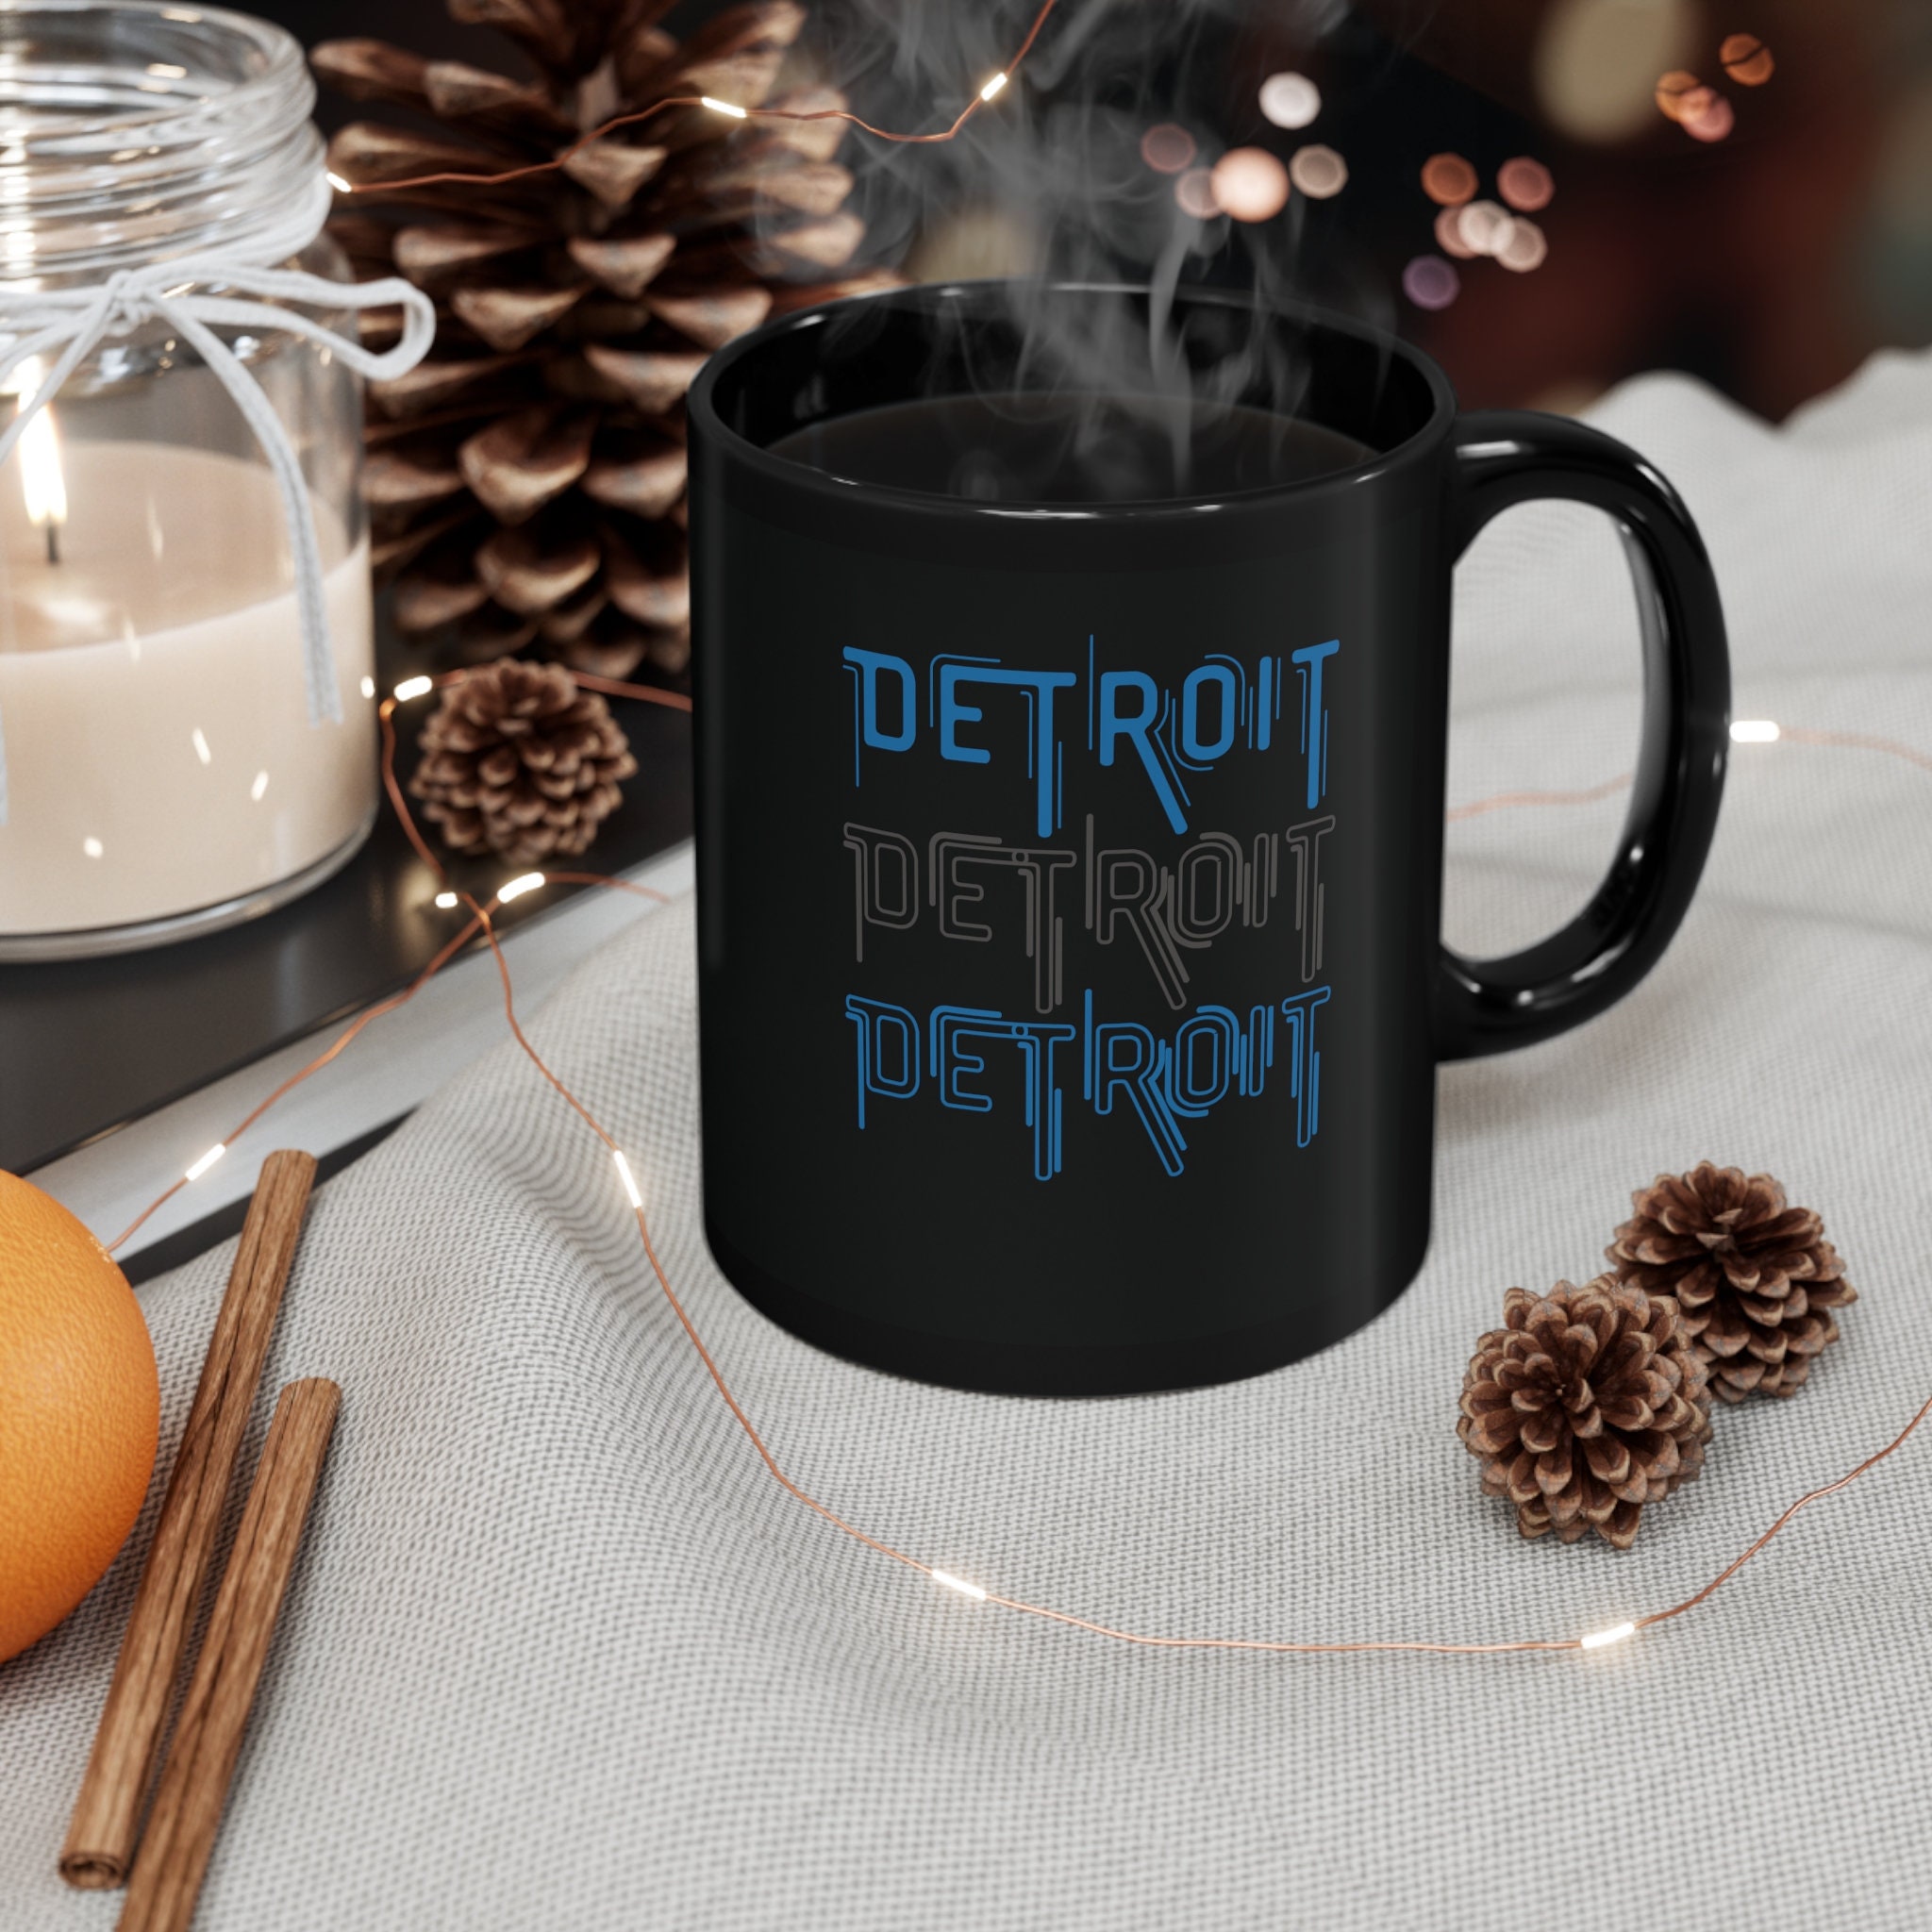 Just Chillin' in Detroit 16 oz Coffee Mug - Pure Detroit